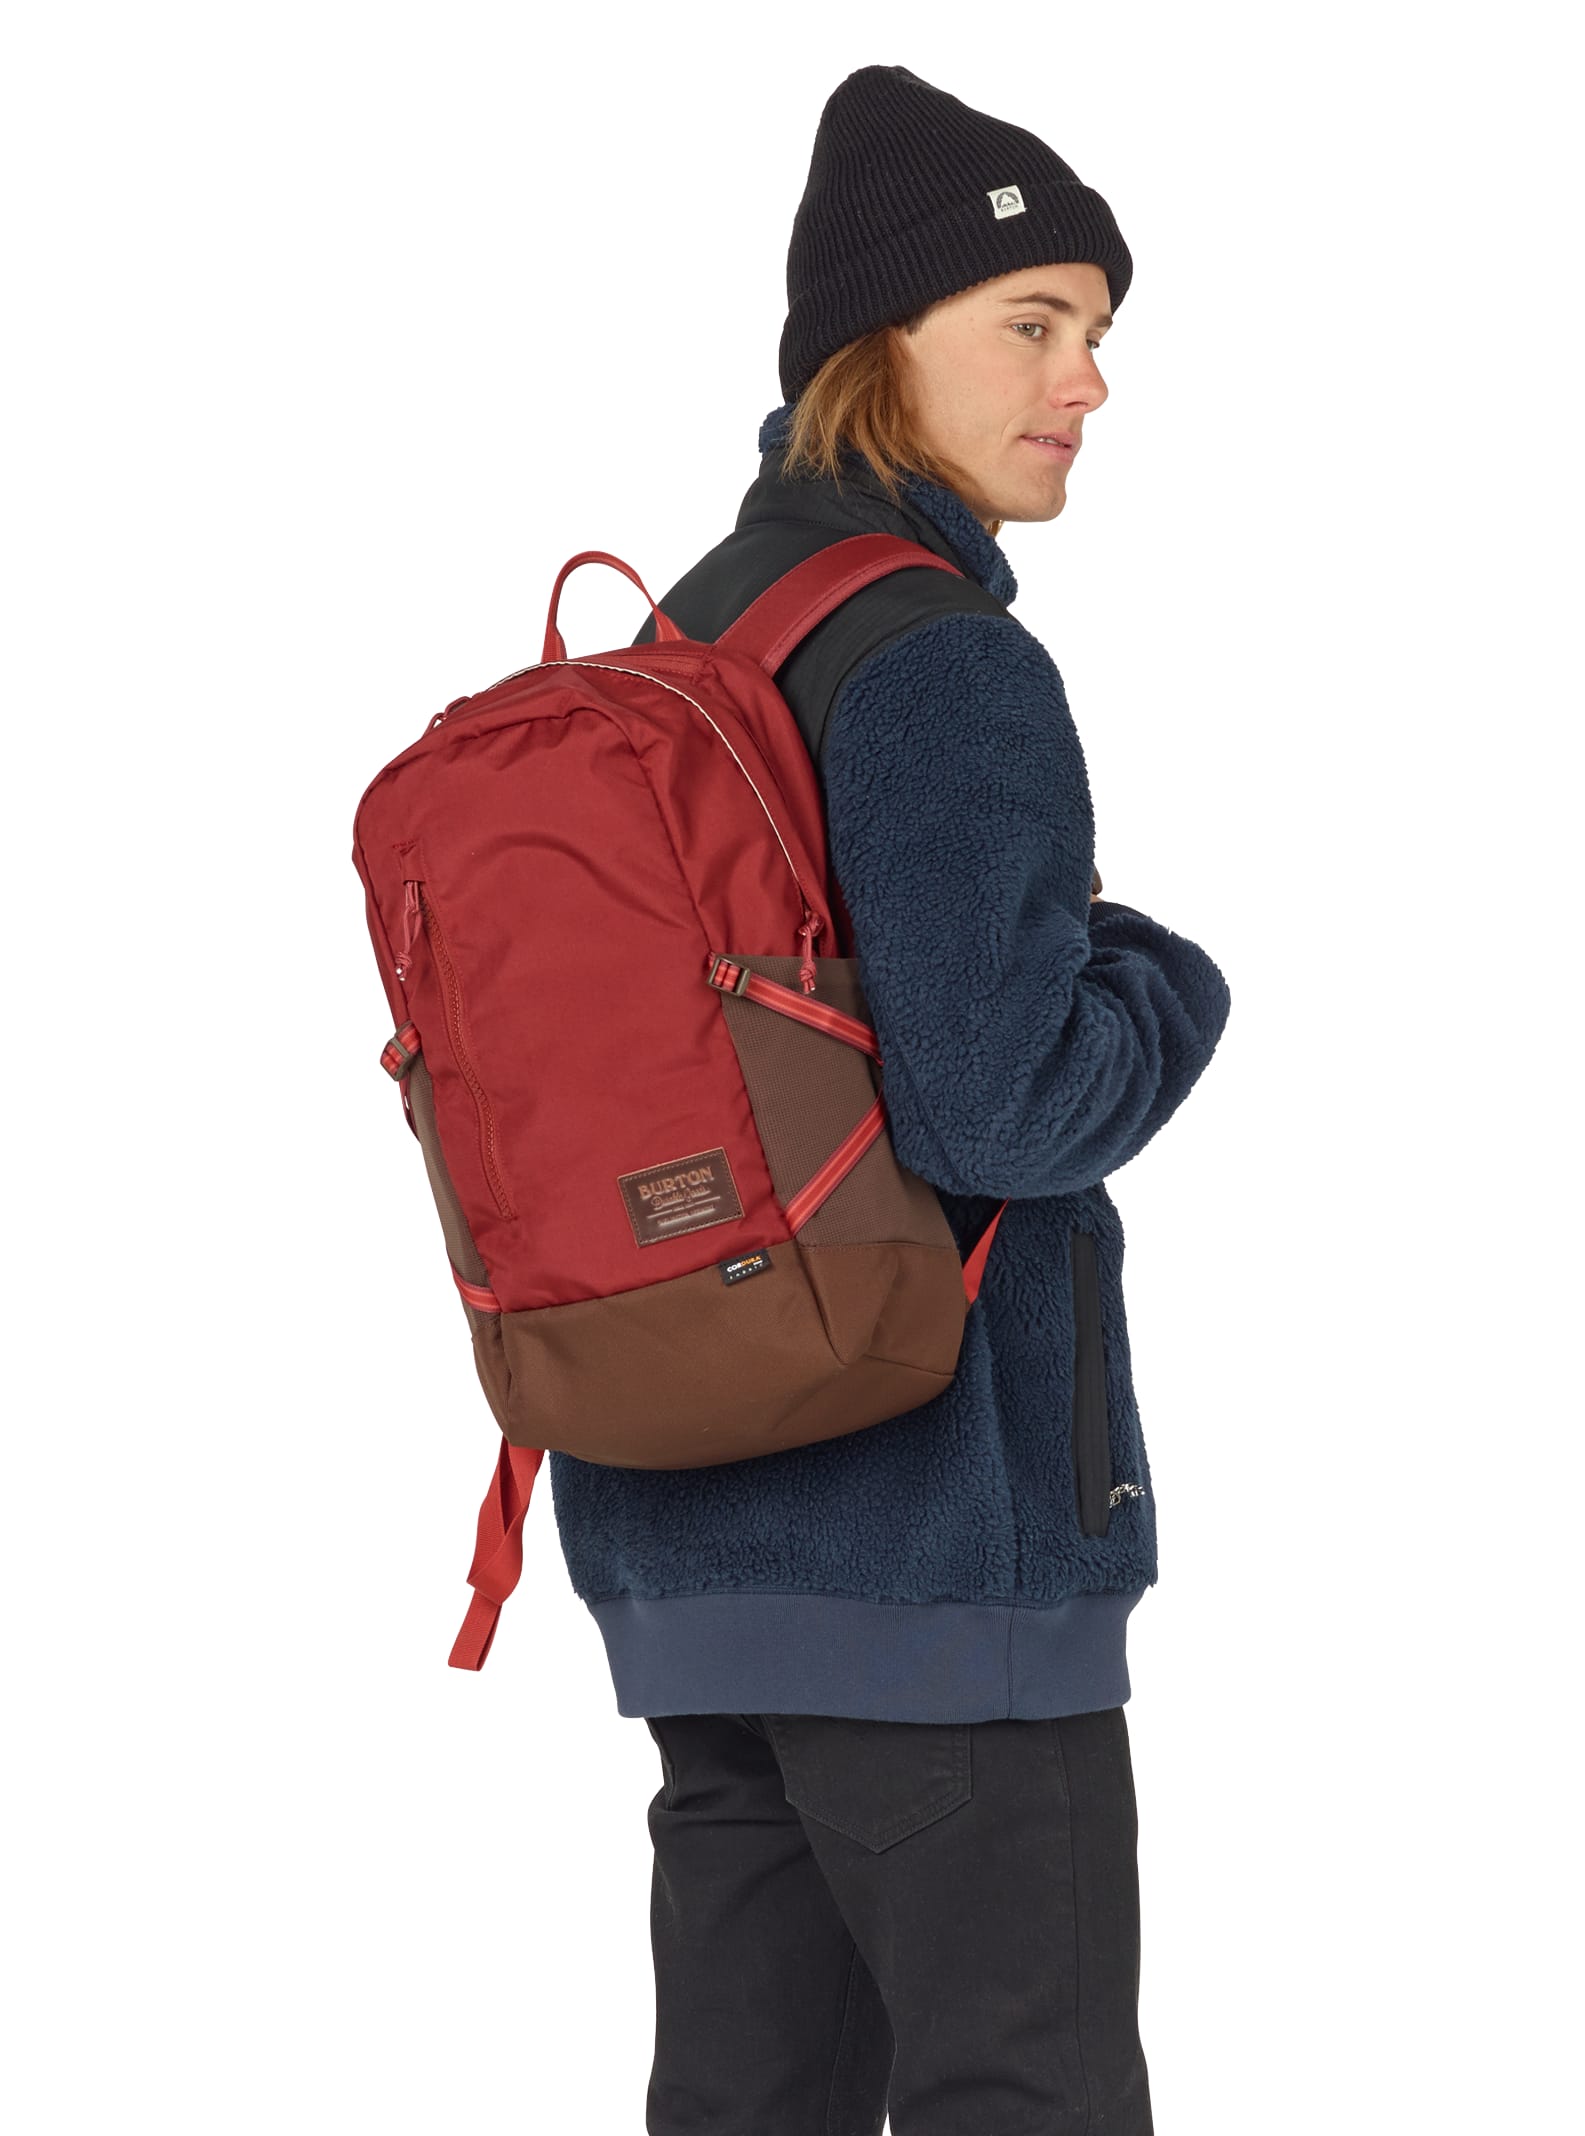 Burton Prospect Backpack | Burton Snowboards Fall 2017 JP